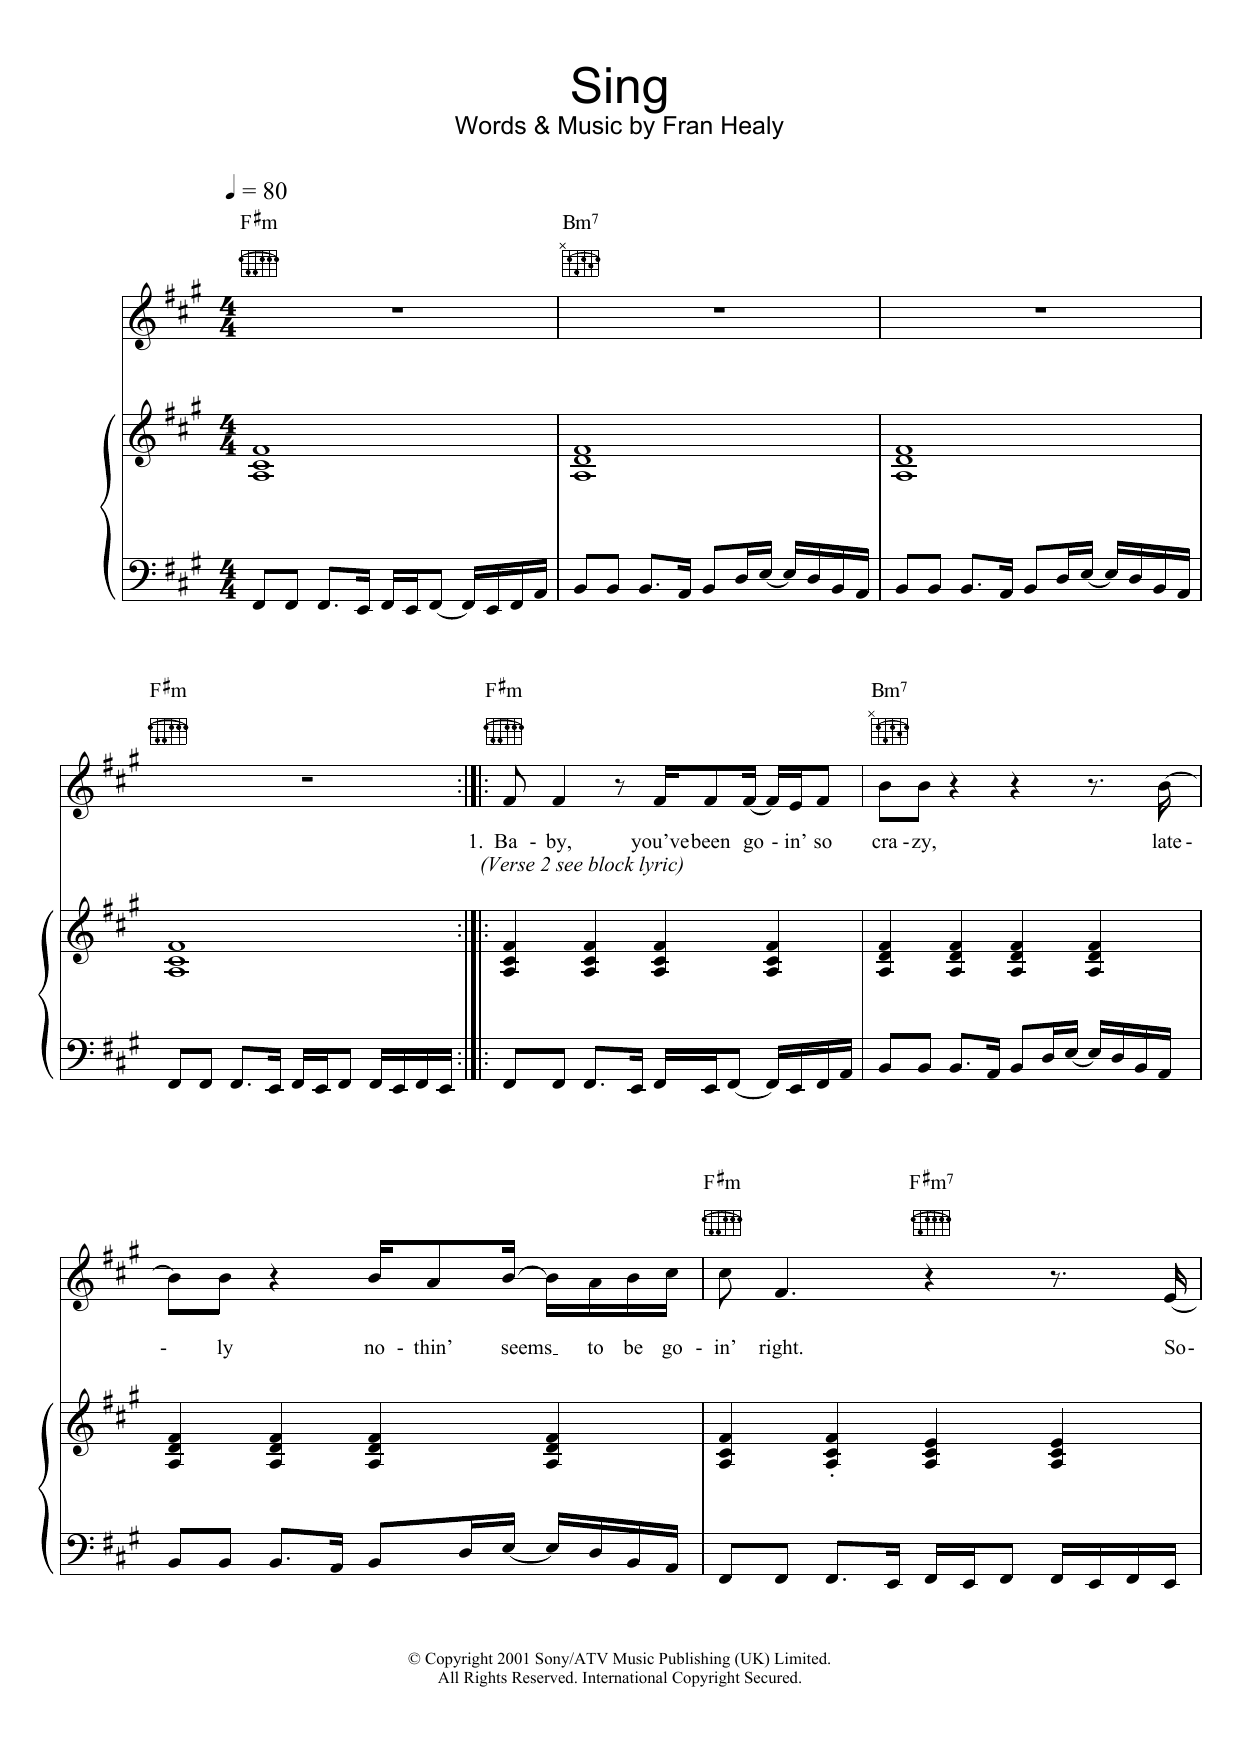 Travis Sing Sheet Music Notes & Chords for Saxophone - Download or Print PDF